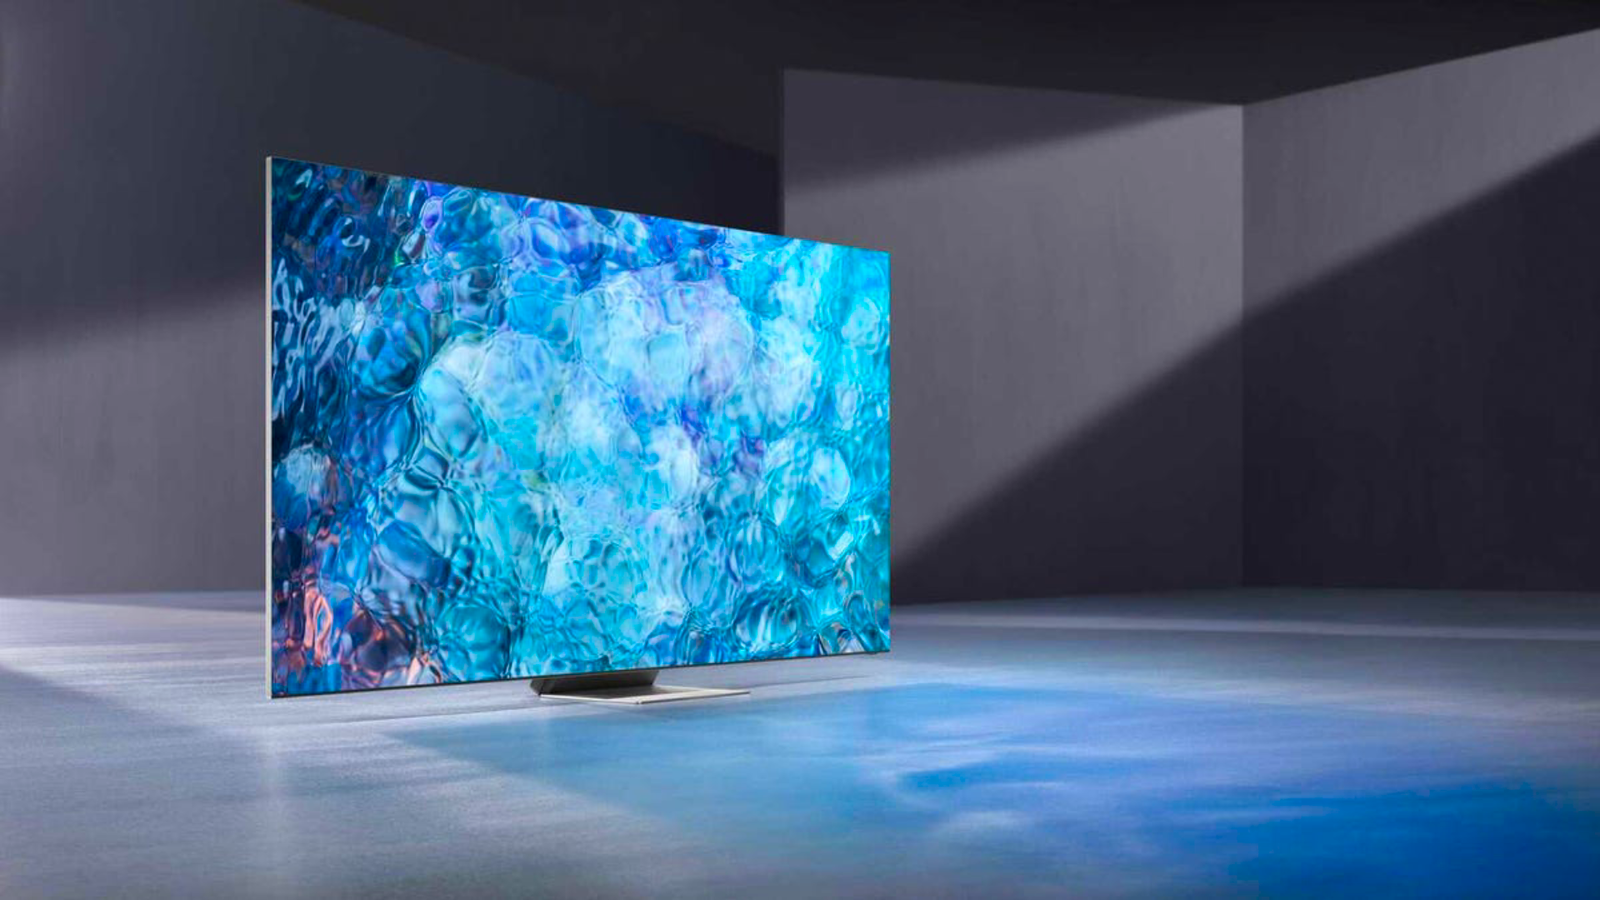 An image of a Samsung QD-LED TV